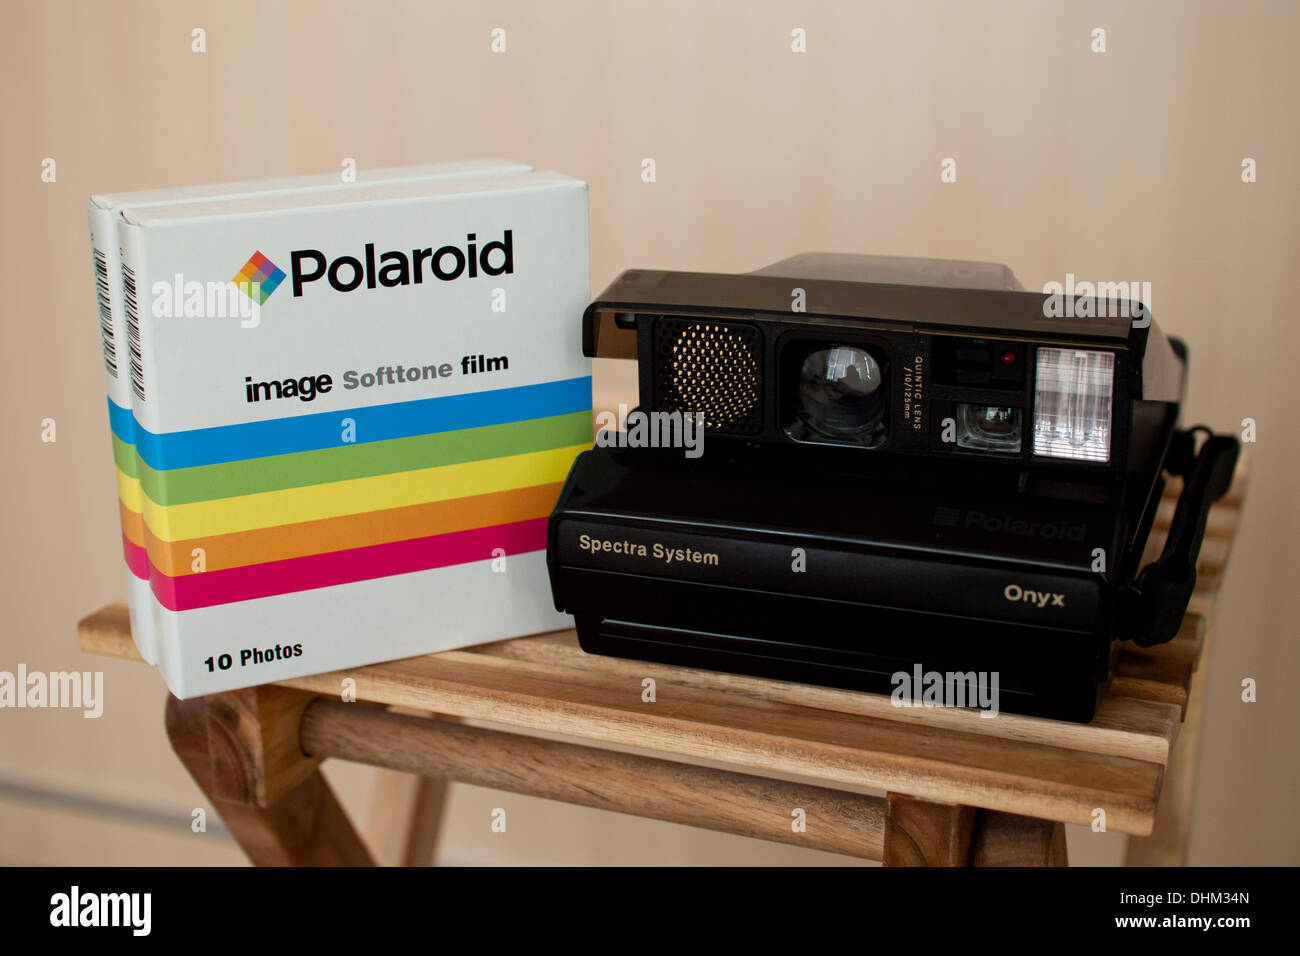 Eine Sofortbildkamera Polaroid Spectra Onyx und Polaroid Image Softtone  Film Stockfotografie - Alamy